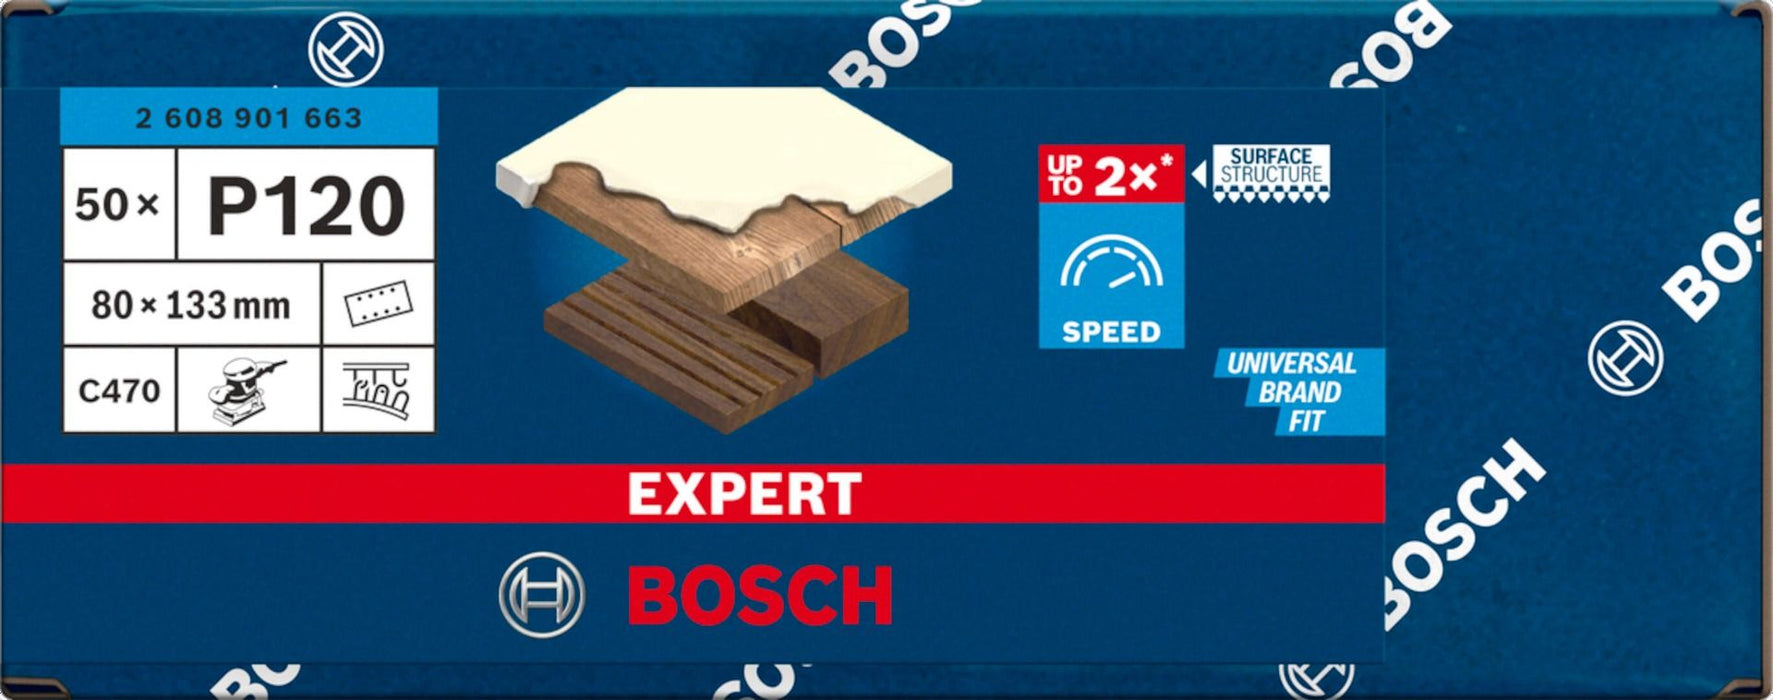 Bosch EXPERT list C470, 80 x 133mm granulacija 120; pakovanje od 50 komada (2608901663)